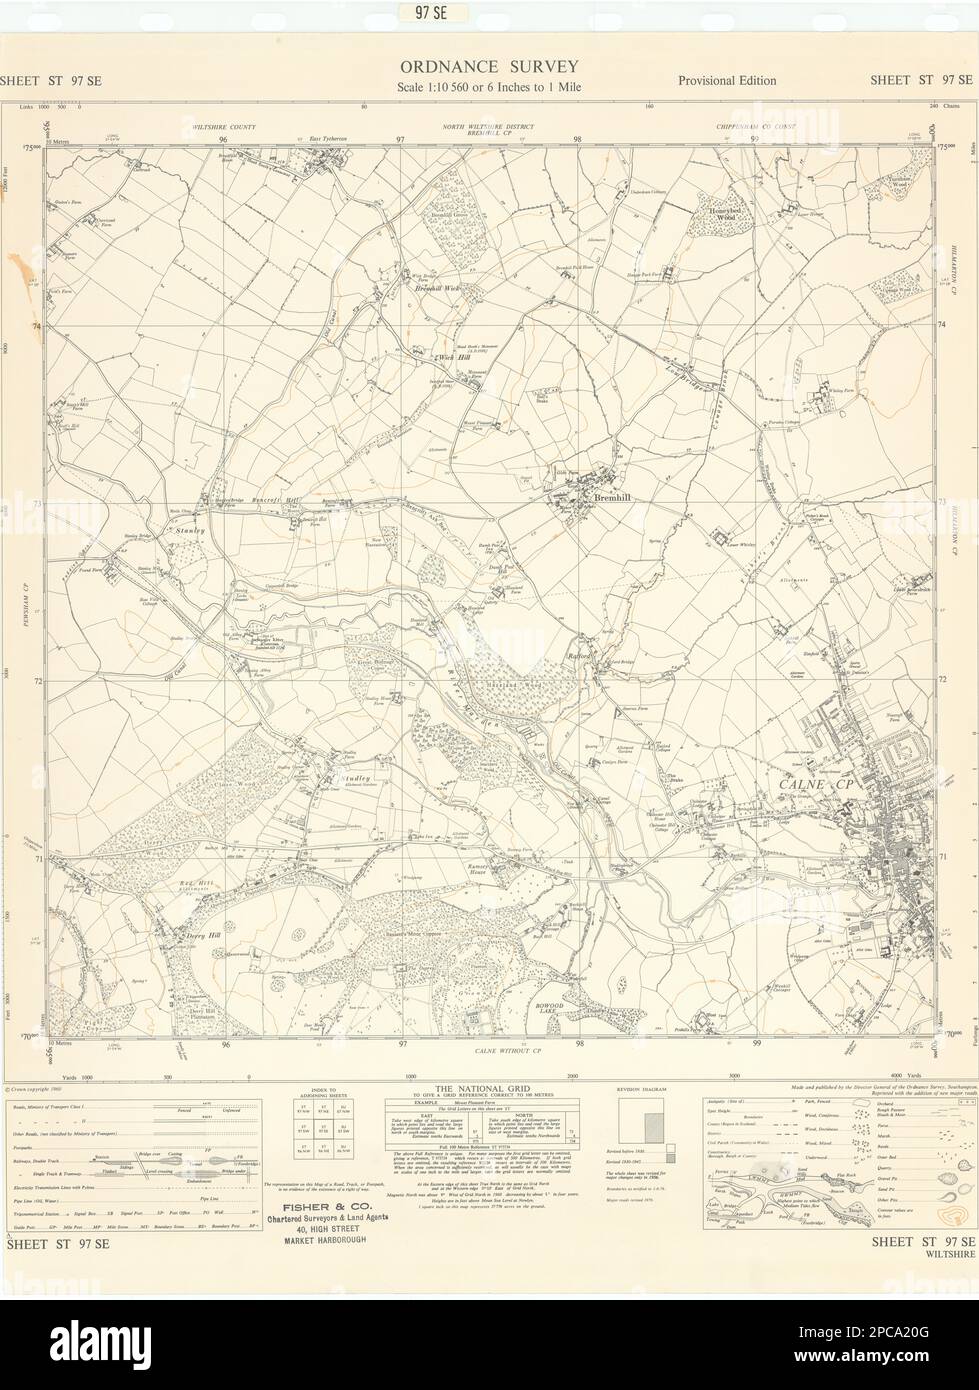 Ordnance Survey Sheet ST97SE Wiltshire Calne Bremhill 1960 antiguo mapa vintage Foto de stock